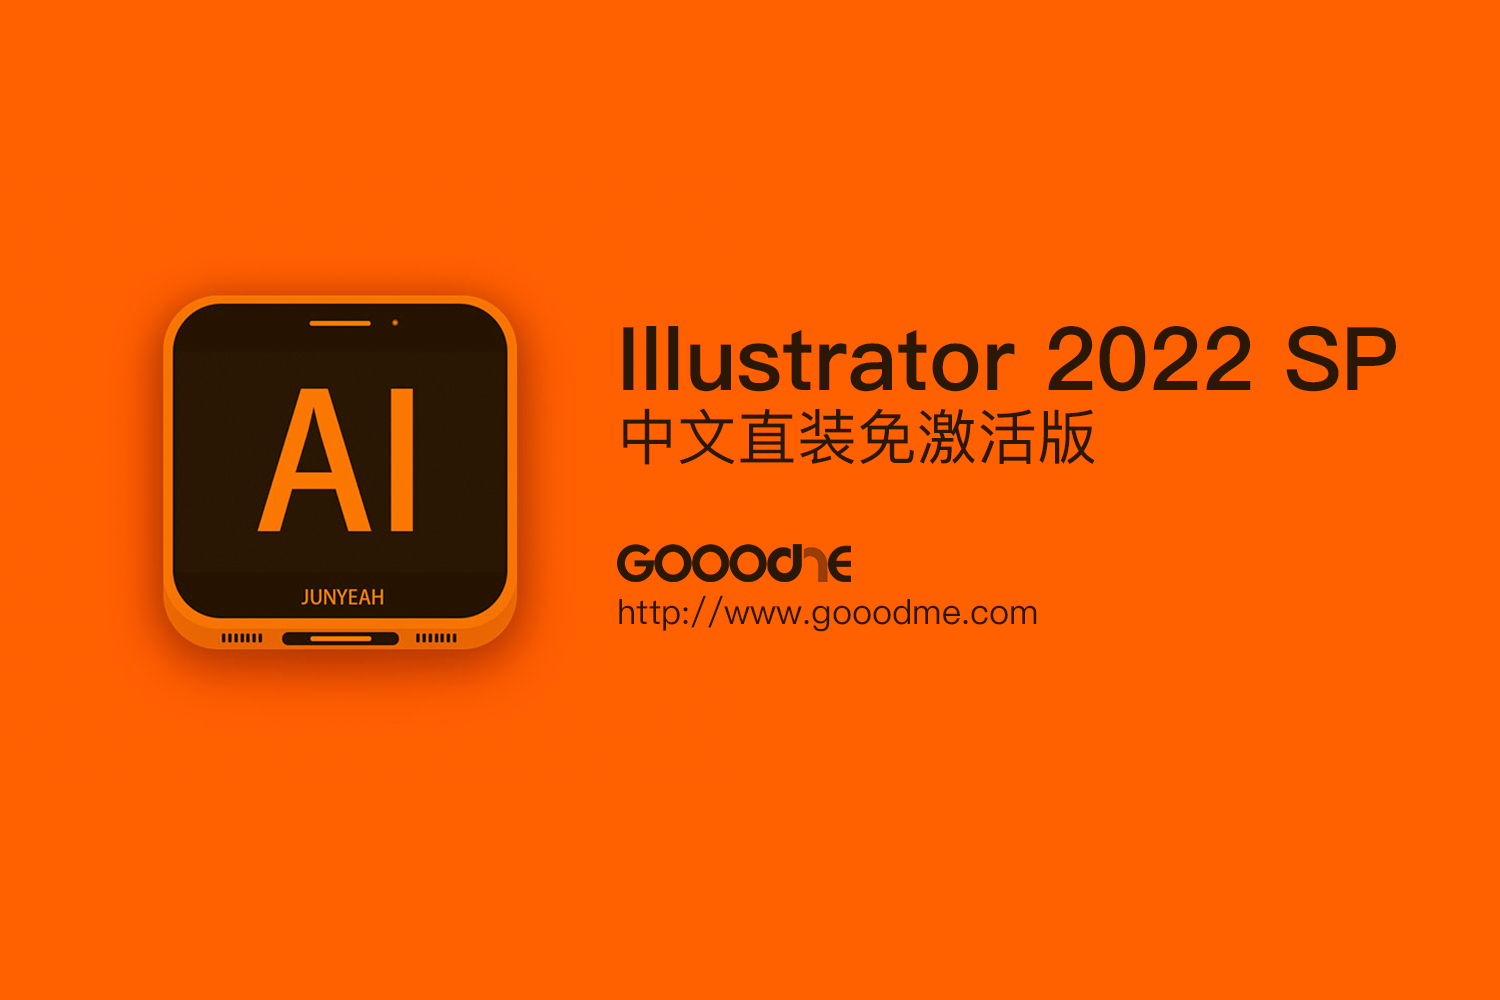 Adobe Illustrator 2022 SP纯净中文免破解激活版专业矢量图形设计工具